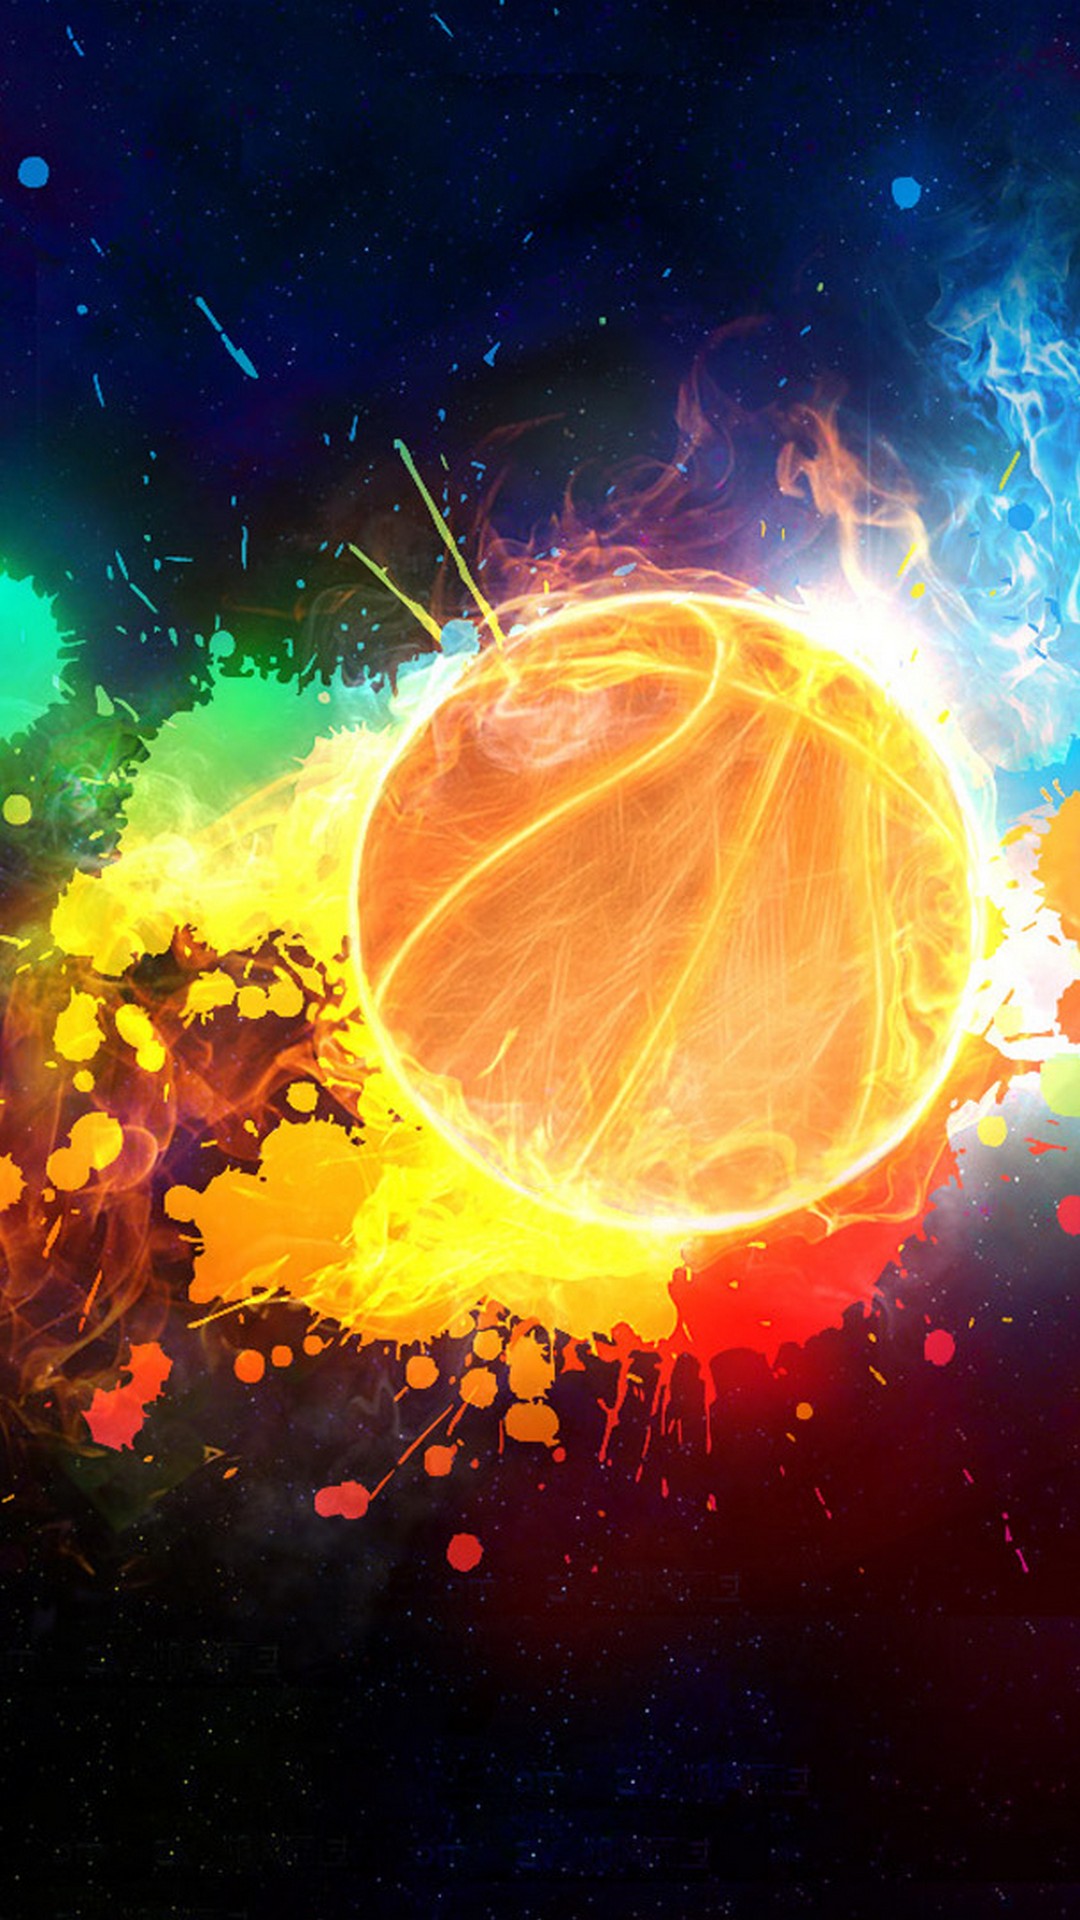 basketball wallpaper iphone,orange,illustration,sky,space,art